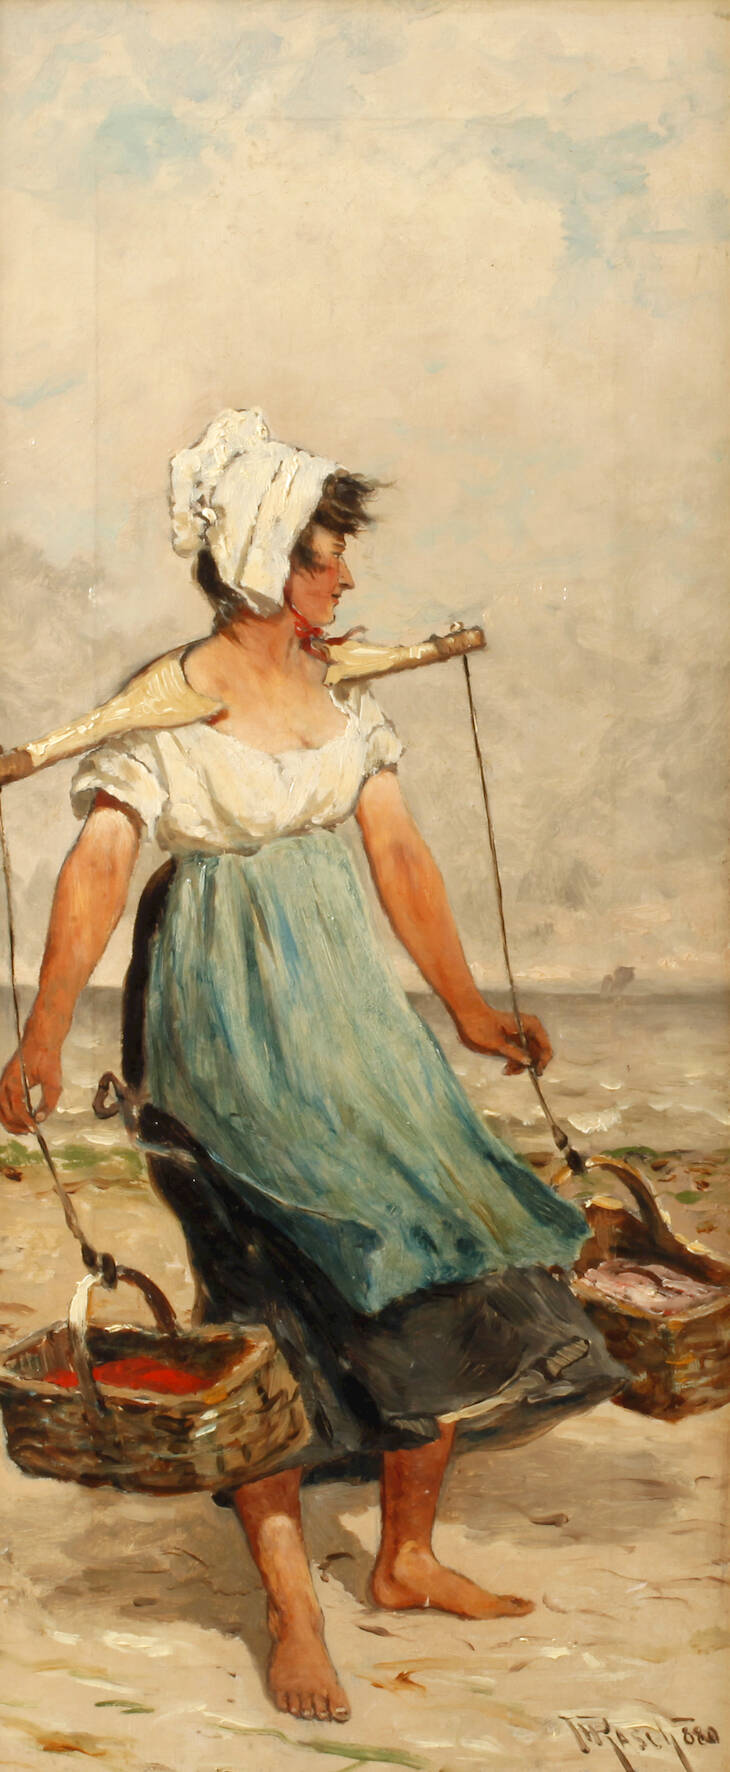 Heinrich Rasch, Fischersfrau am Strand